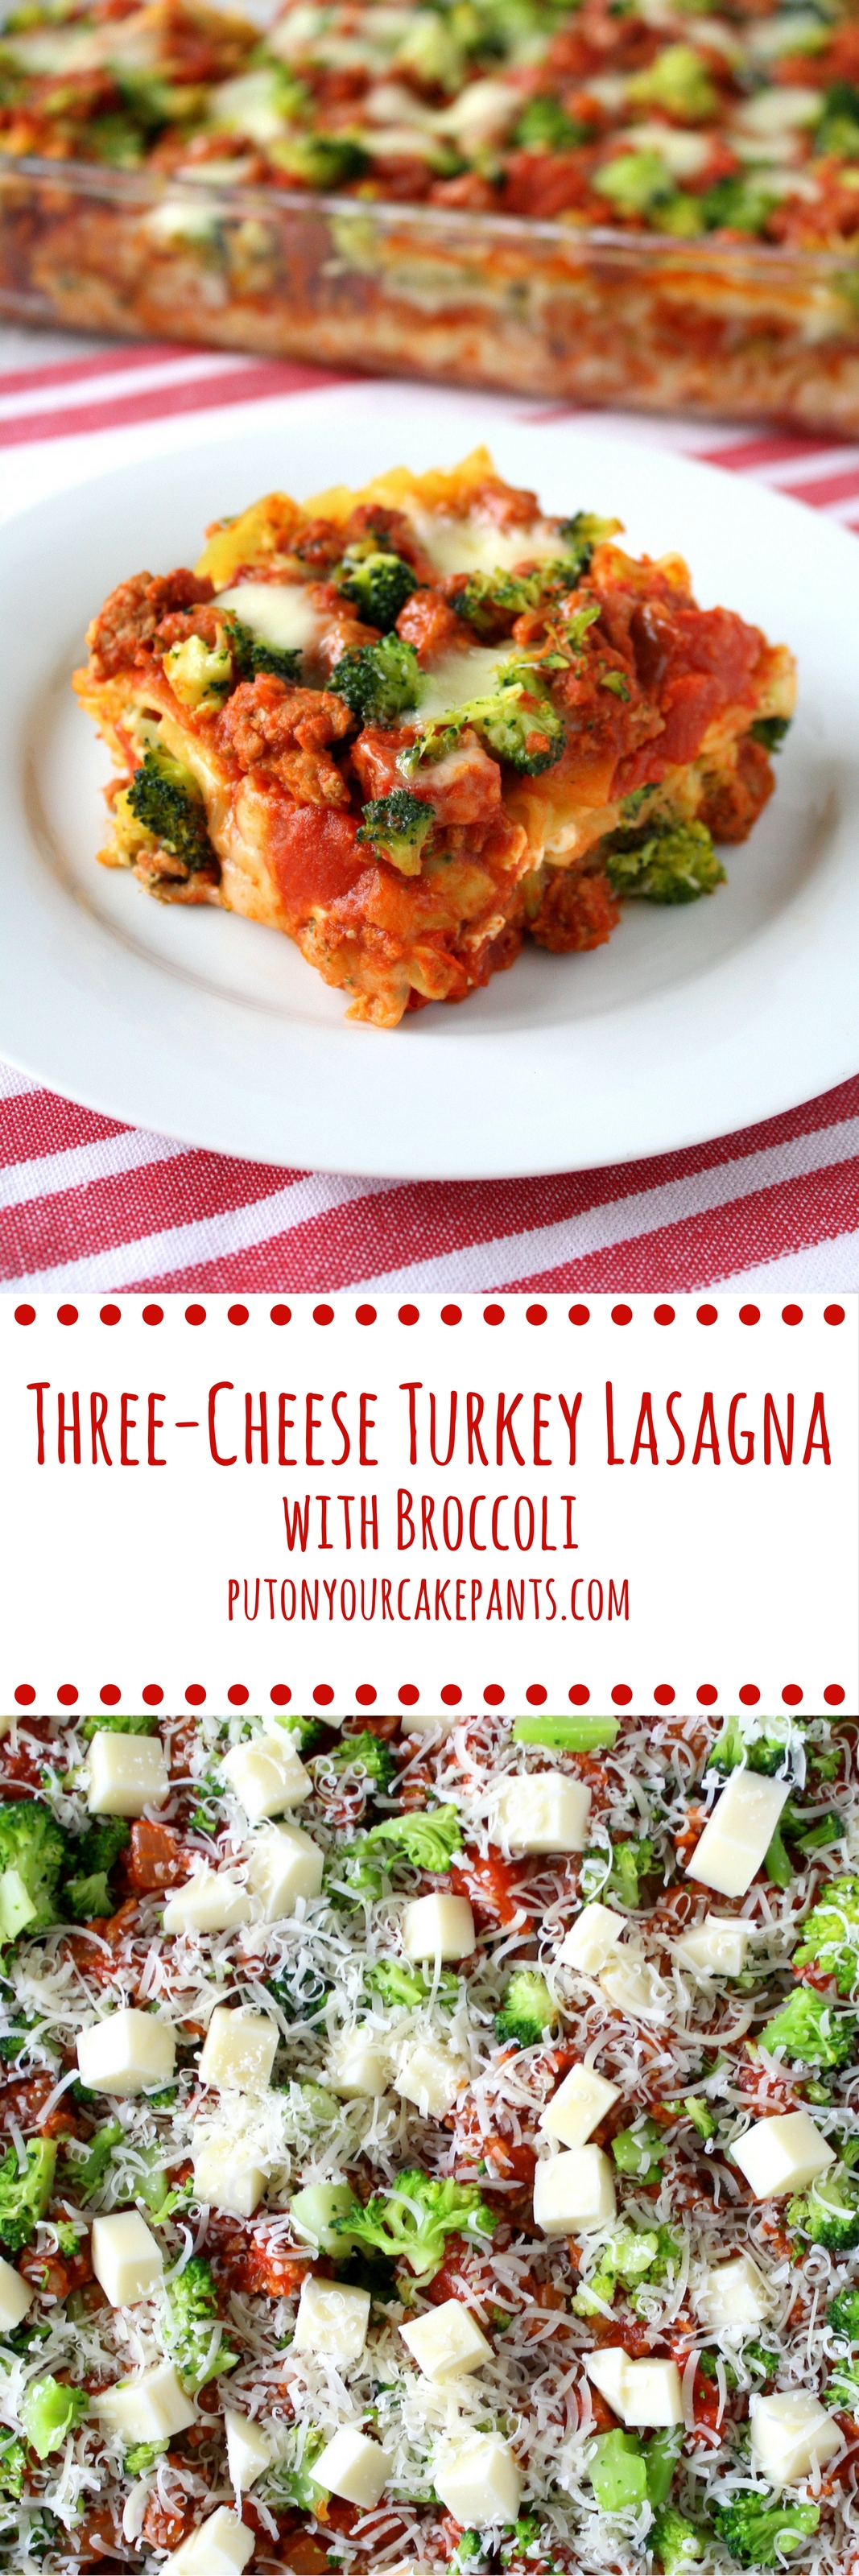 three-cheese turkey lasagna with broccoli